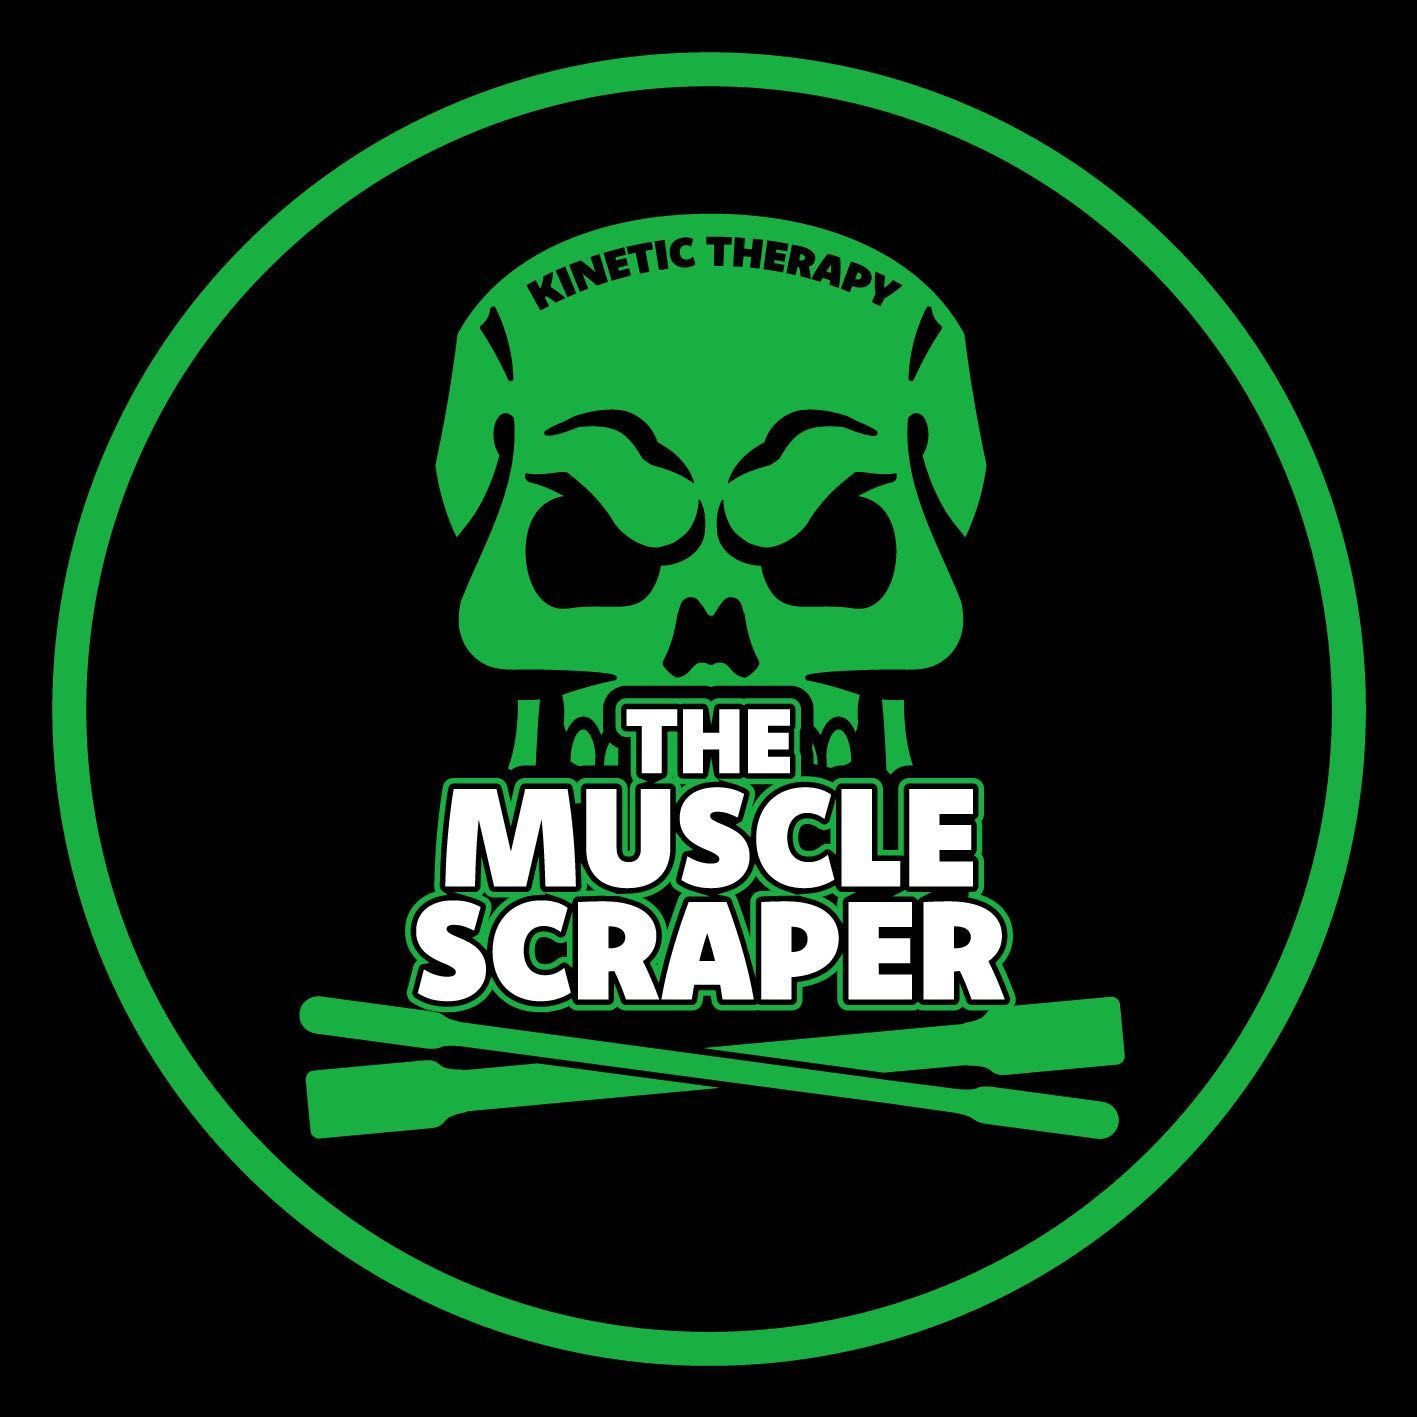 The Muscle Scraper @ Gym28, Astley, 199B Chaddock Lane, Gym 28, M28 1DW, Manchester